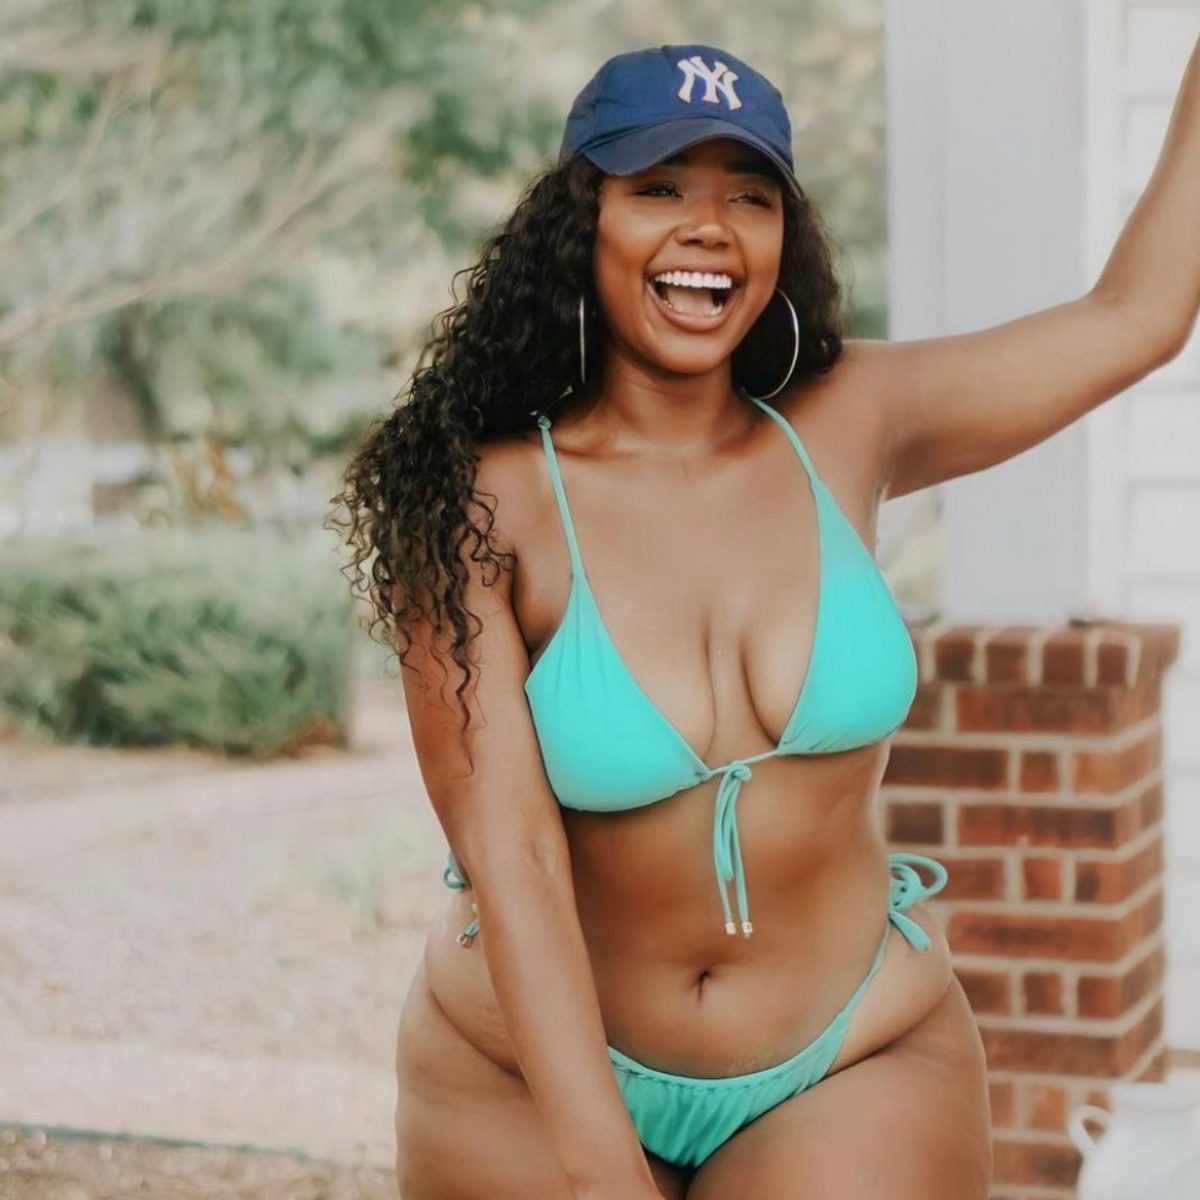 Plus-Size Model Sydney Bell Wants Women To Know That Every Body Is A "Bikini Body"